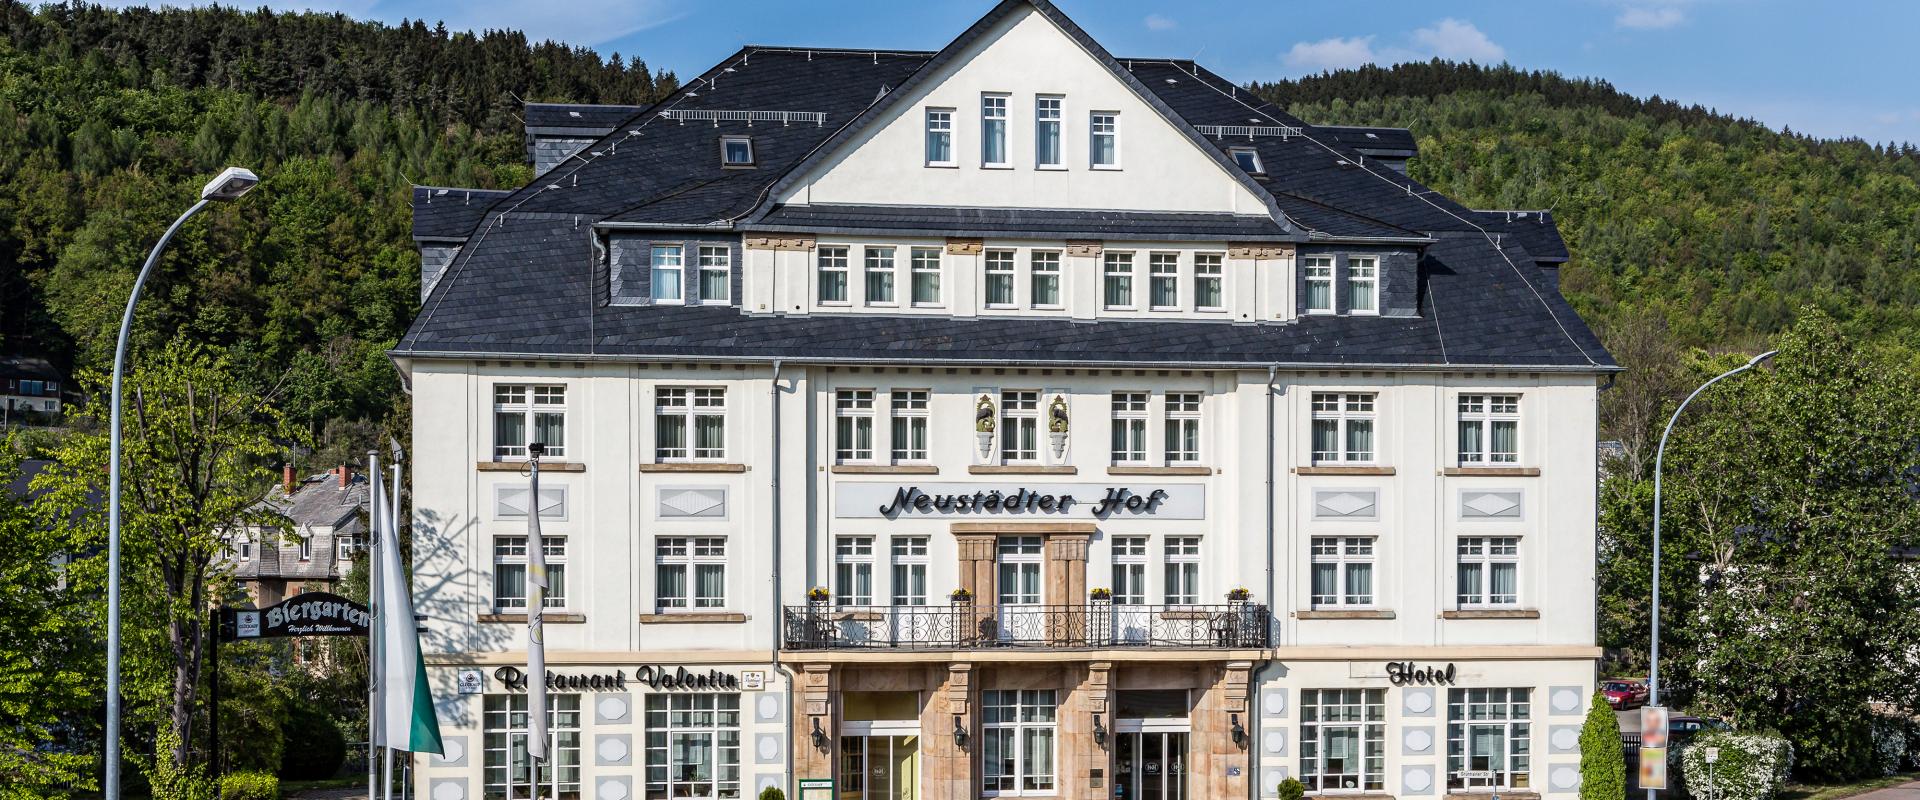 30576 Biker Hotel Neustädter Hof im Erzgebirge.jpg